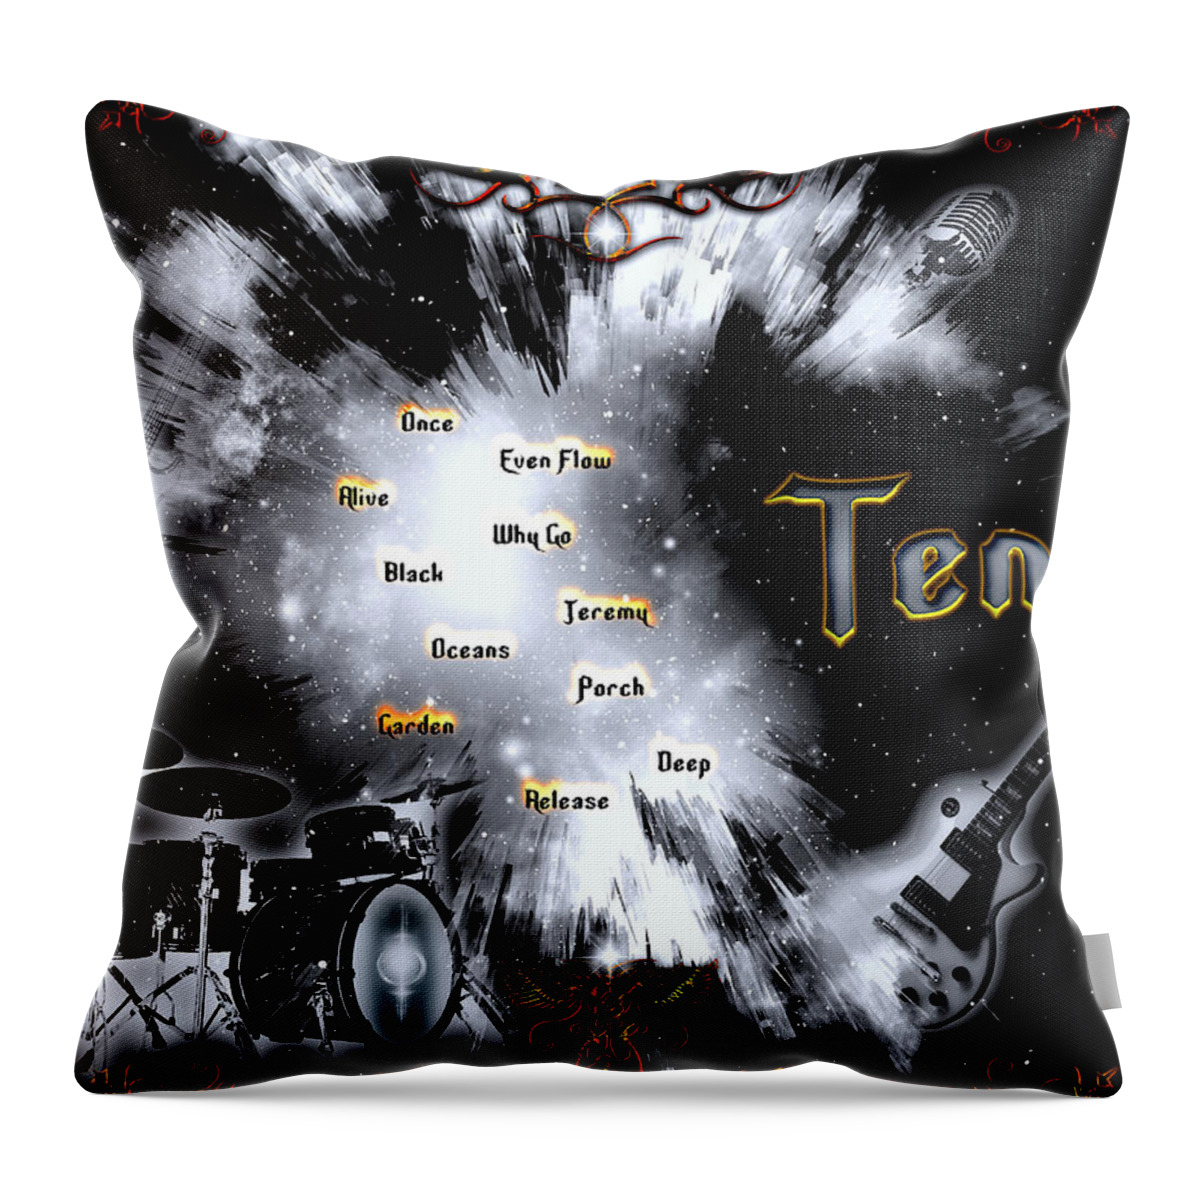 Ten Throw Pillow featuring the digital art Ten by Michael Damiani